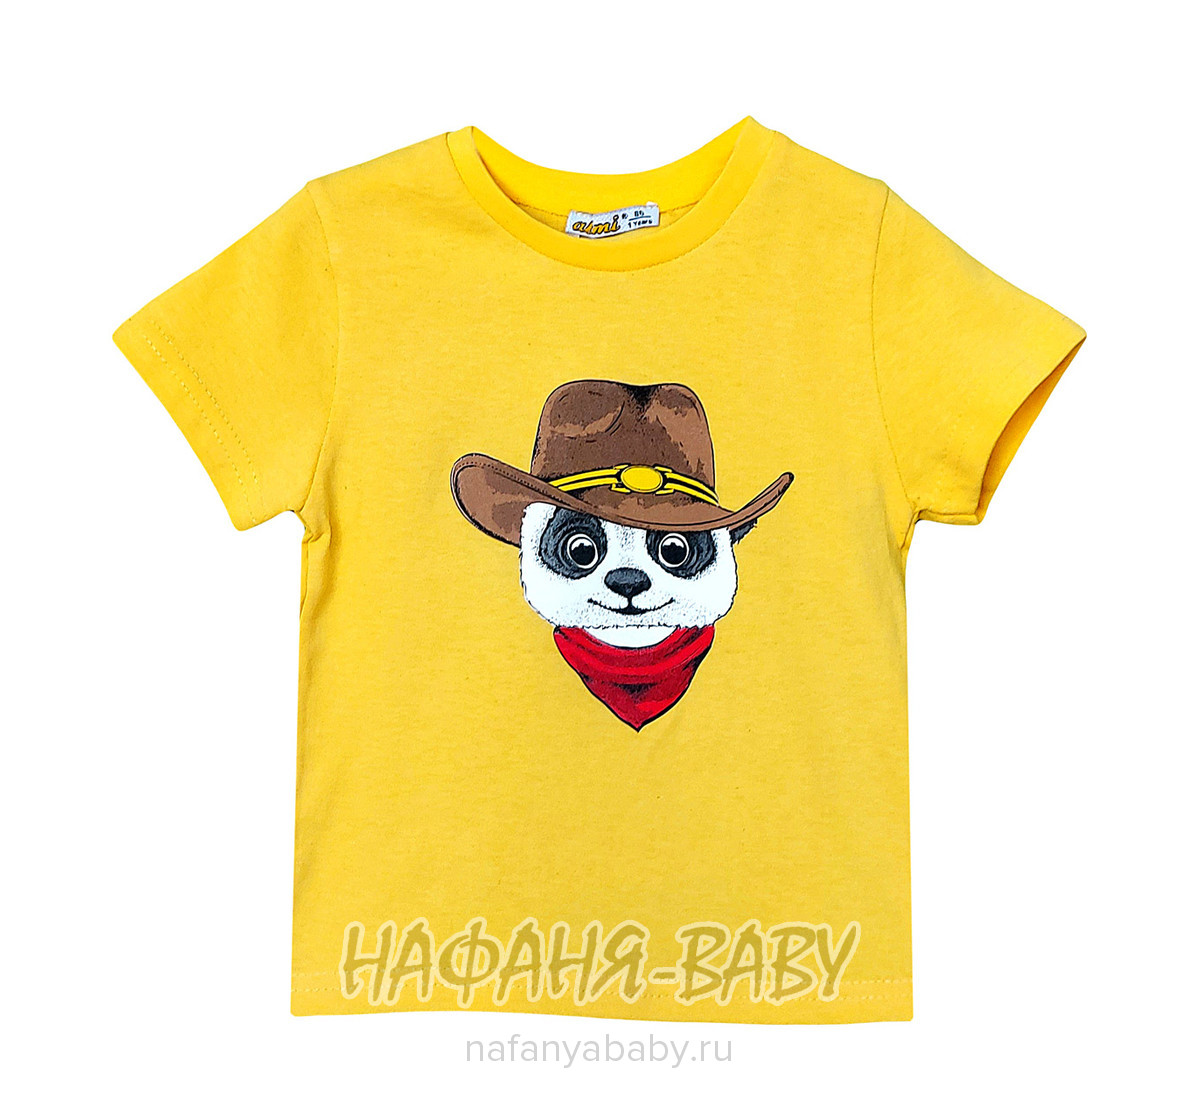 Детская футболка ALG арт: 122120, 1-4 года, цвет желтый, оптом Турция